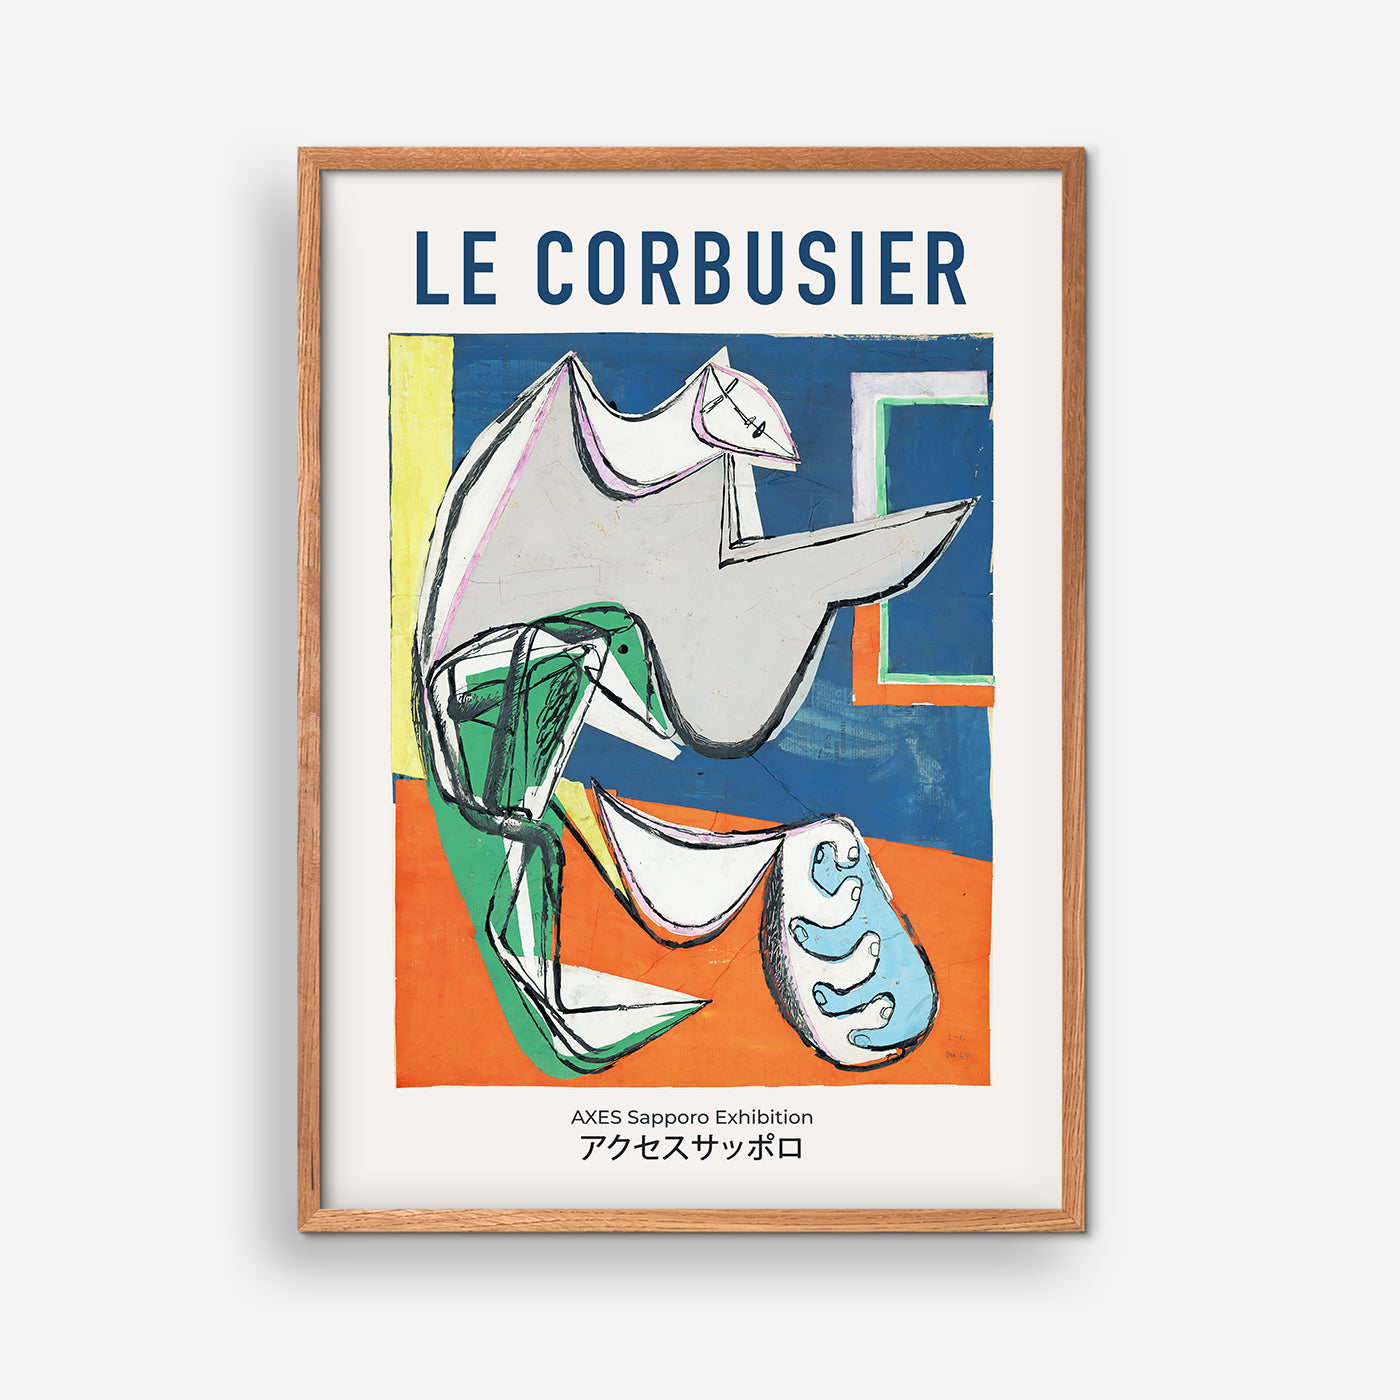 Le Corbusier A. S. Exhibition Poster 1949